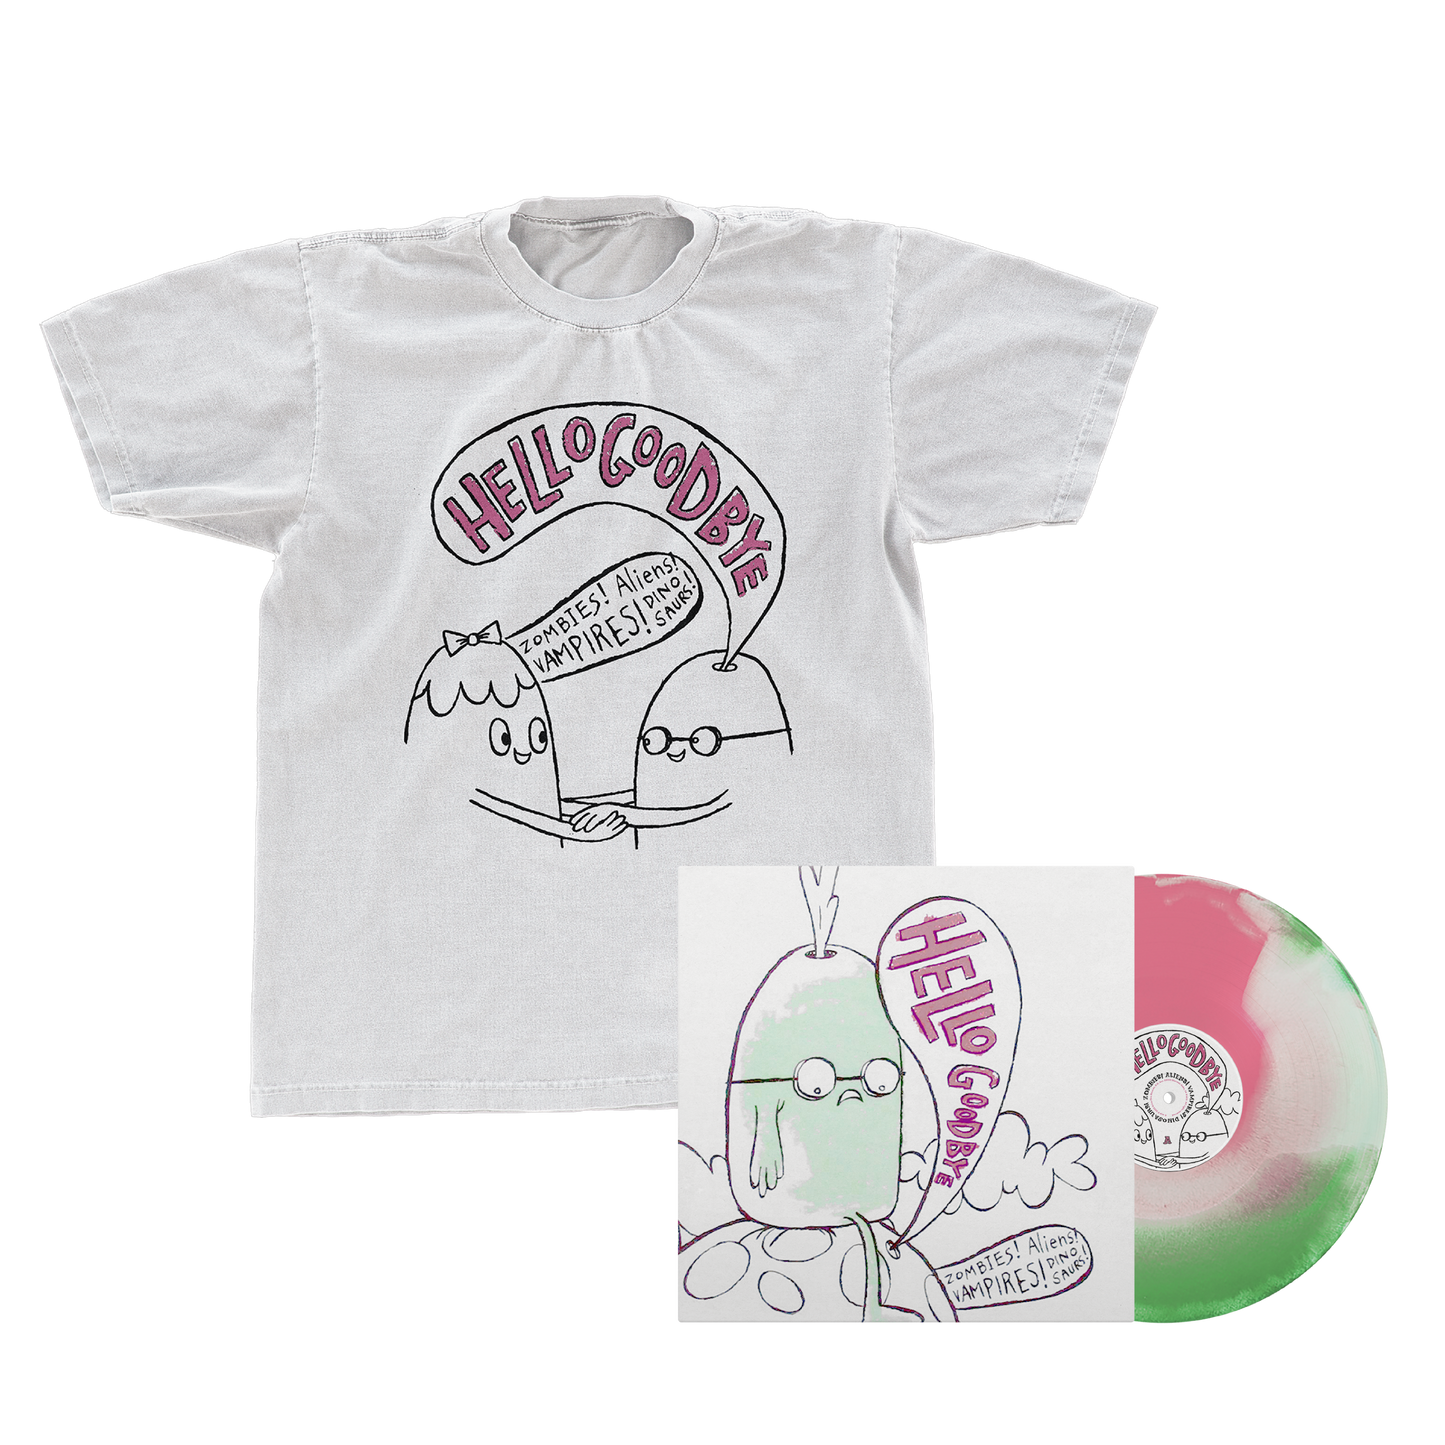 Hellogoodbye - “Zombies! Aliens! Vampires! Dinosaurs!” 3 Color A / B Vinyl + T-Shirt